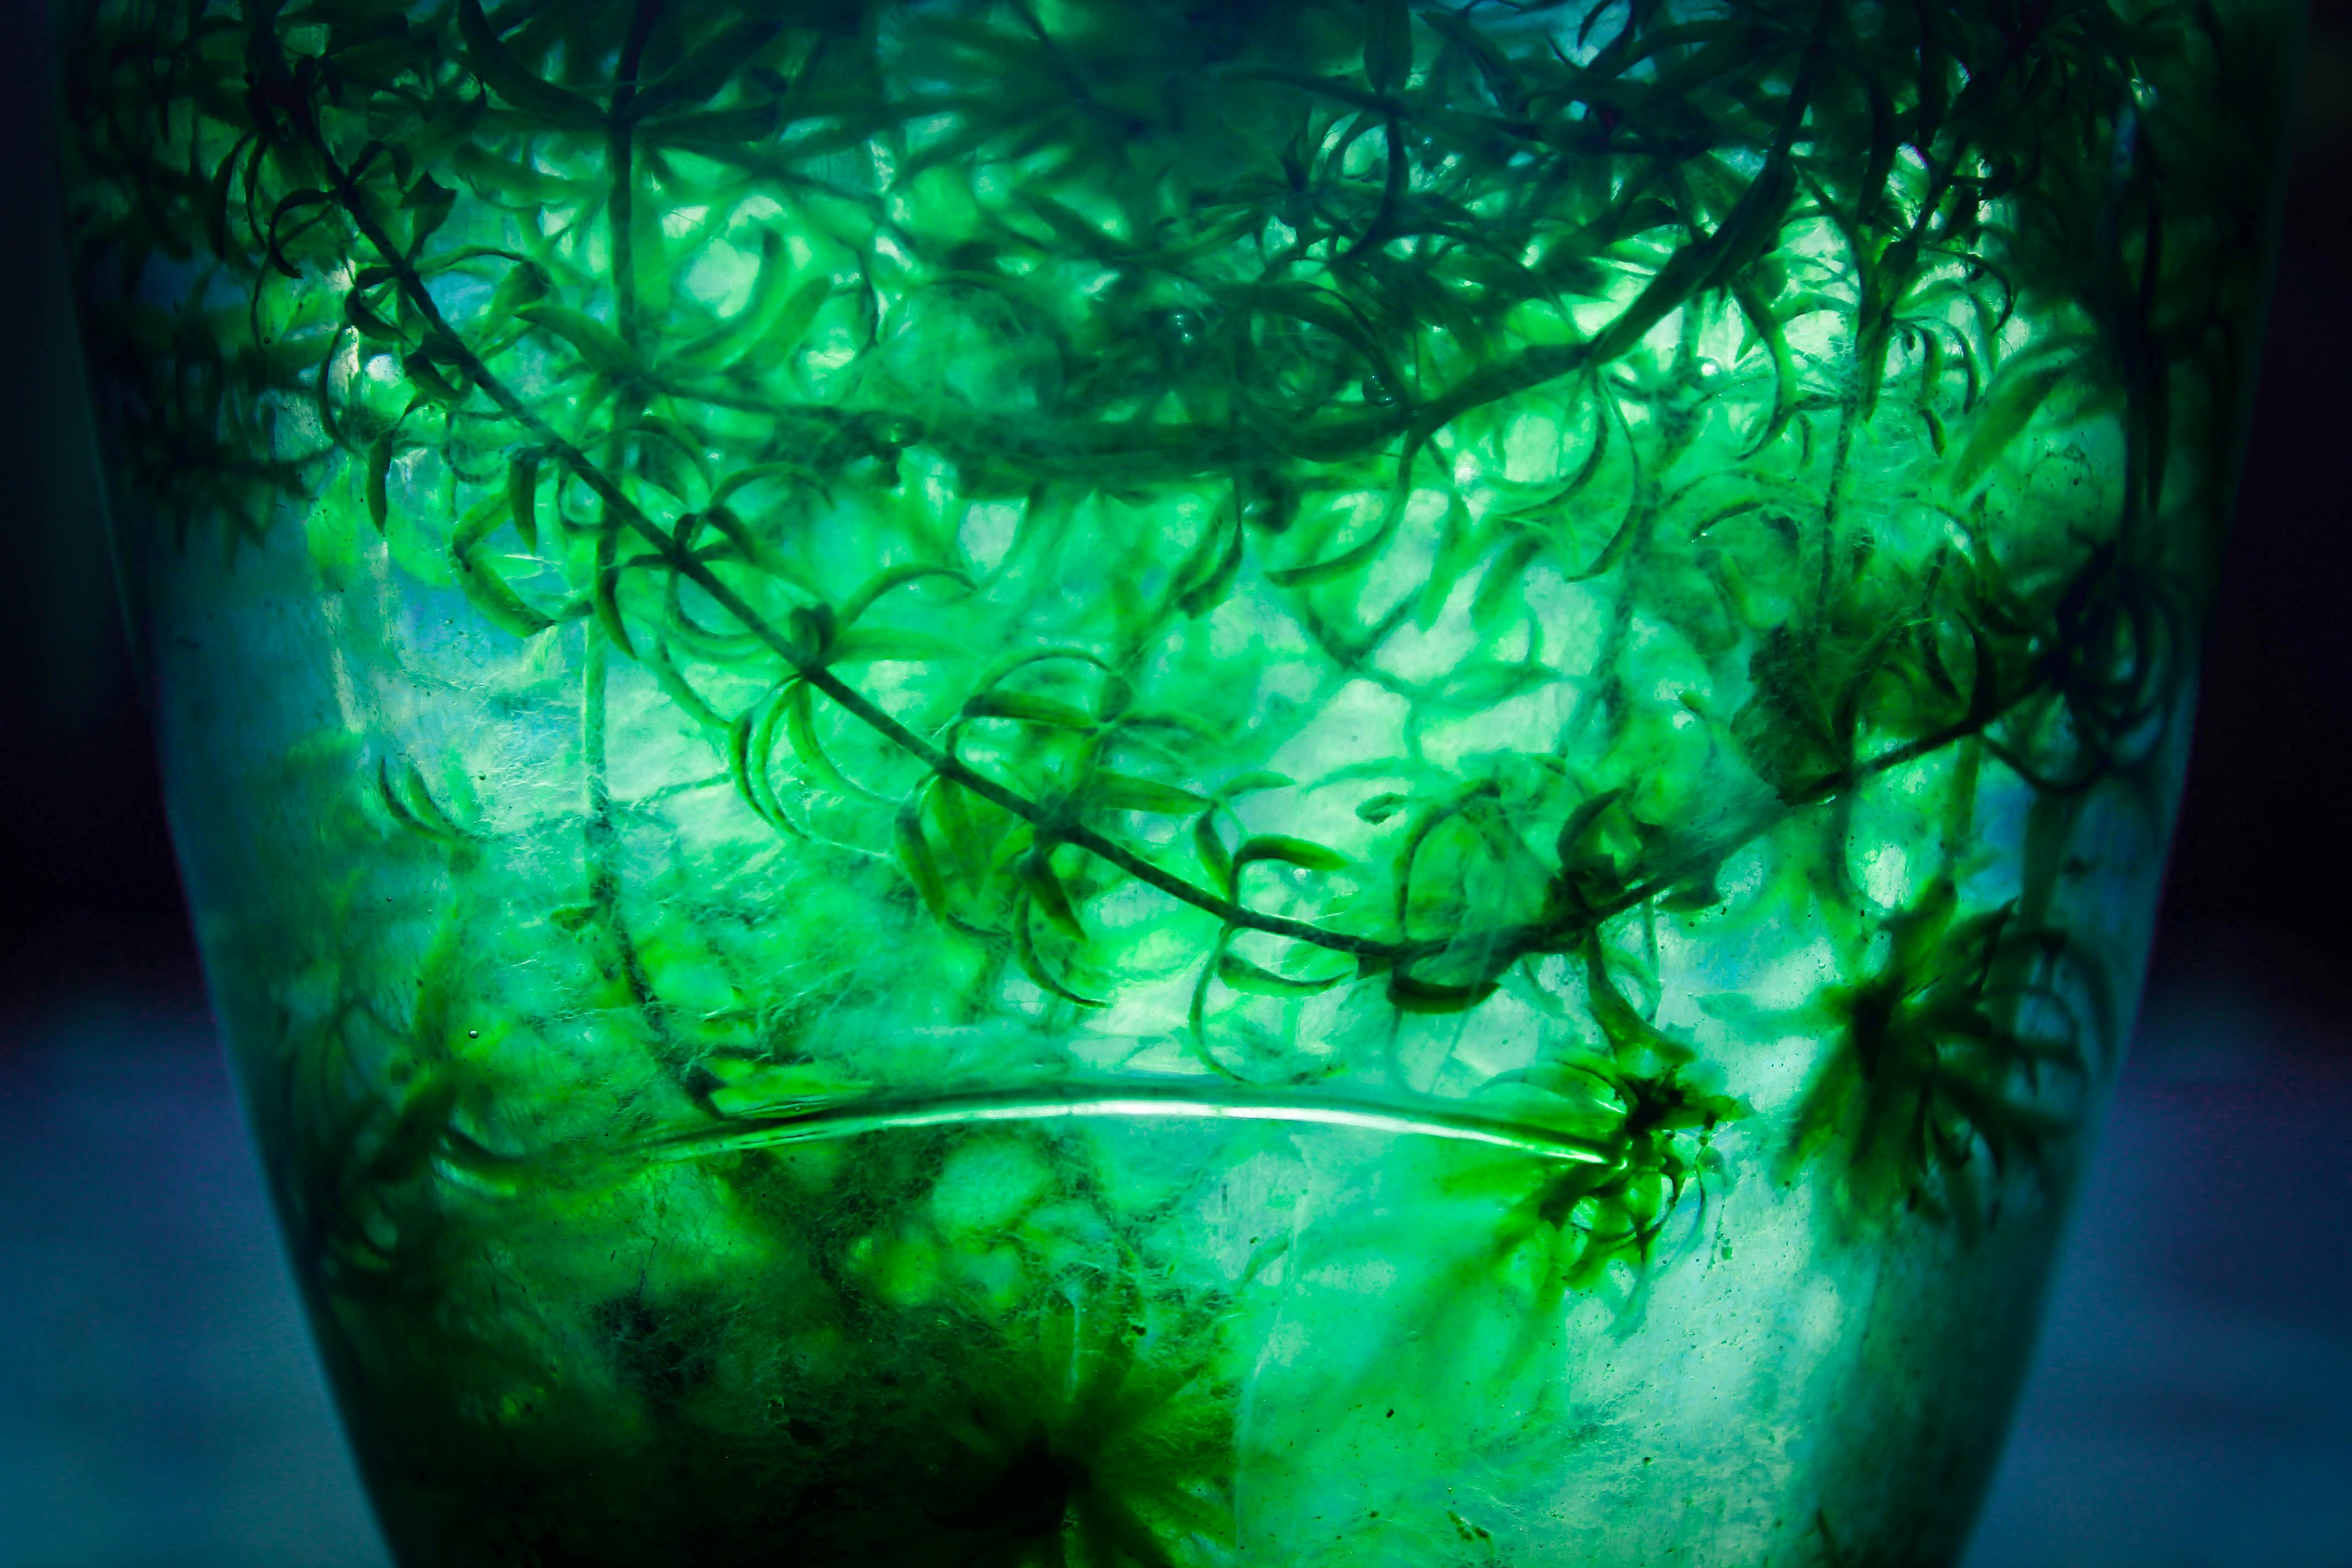 Free stock photo of aquatic plant, broken glass, green